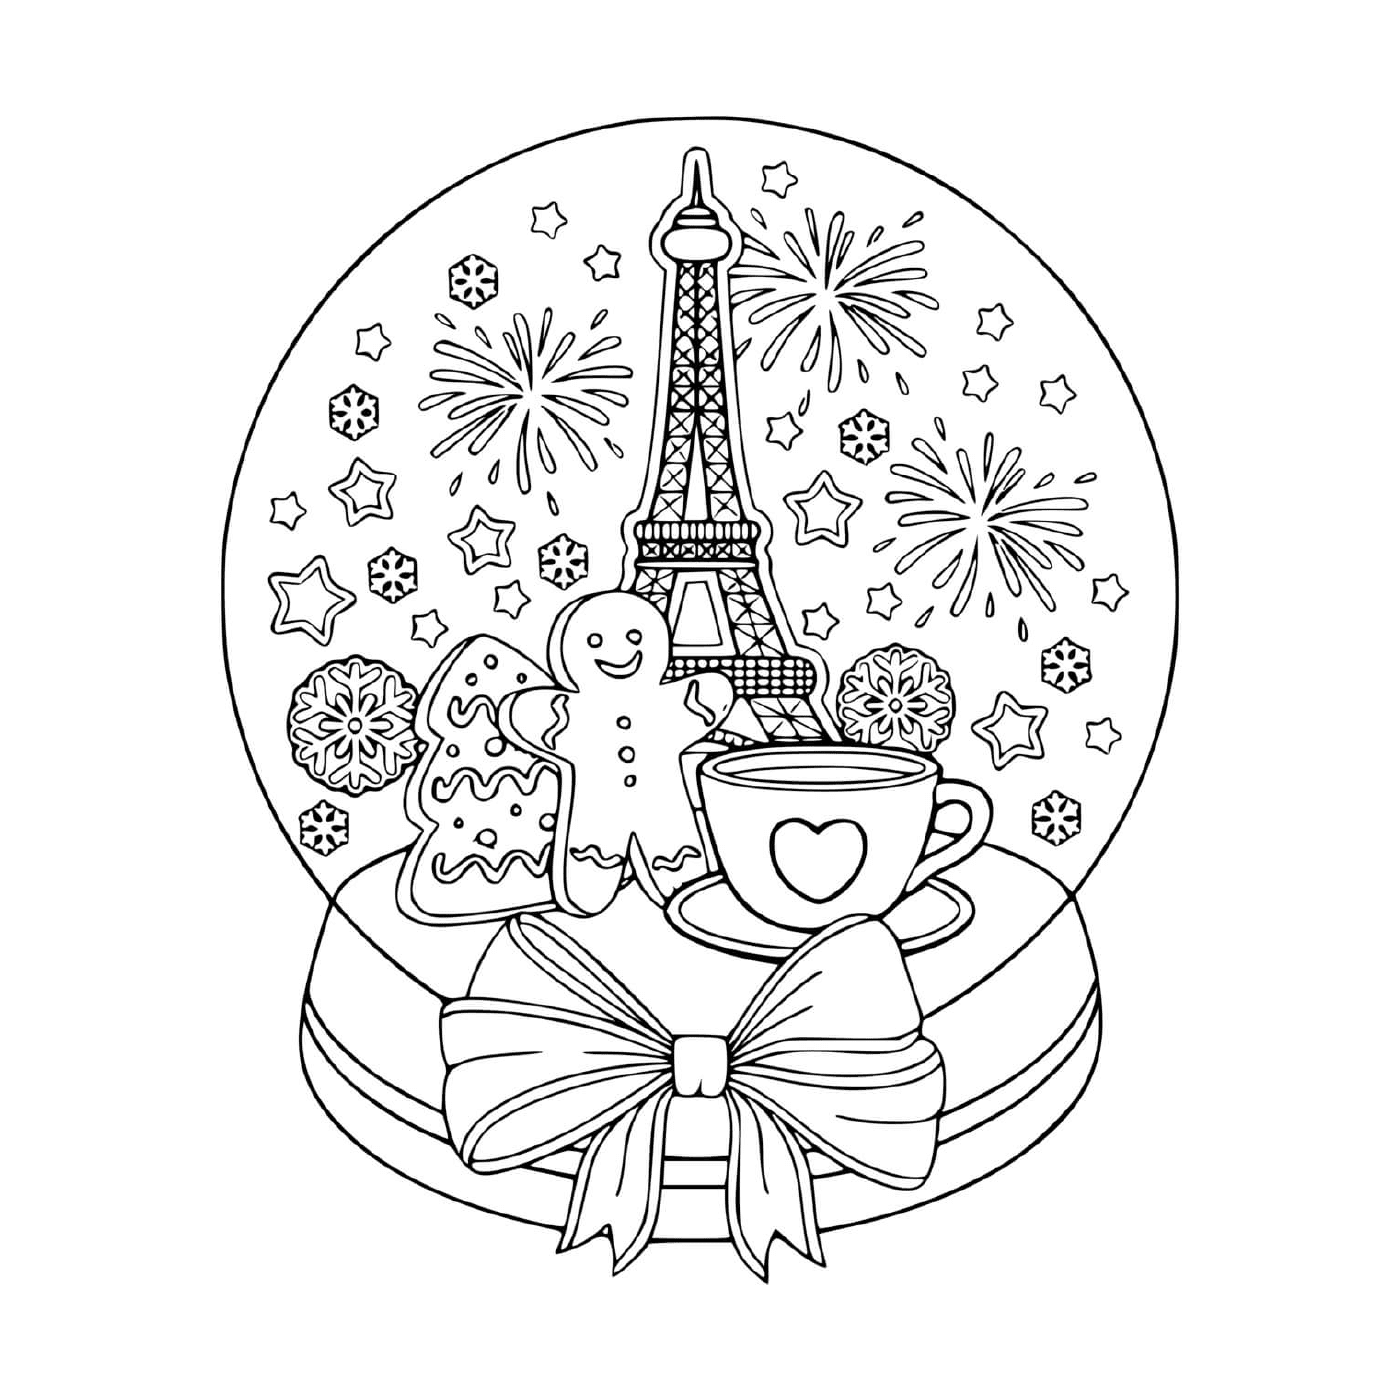  Erwachsener Schneeball, Miniatur Paris 